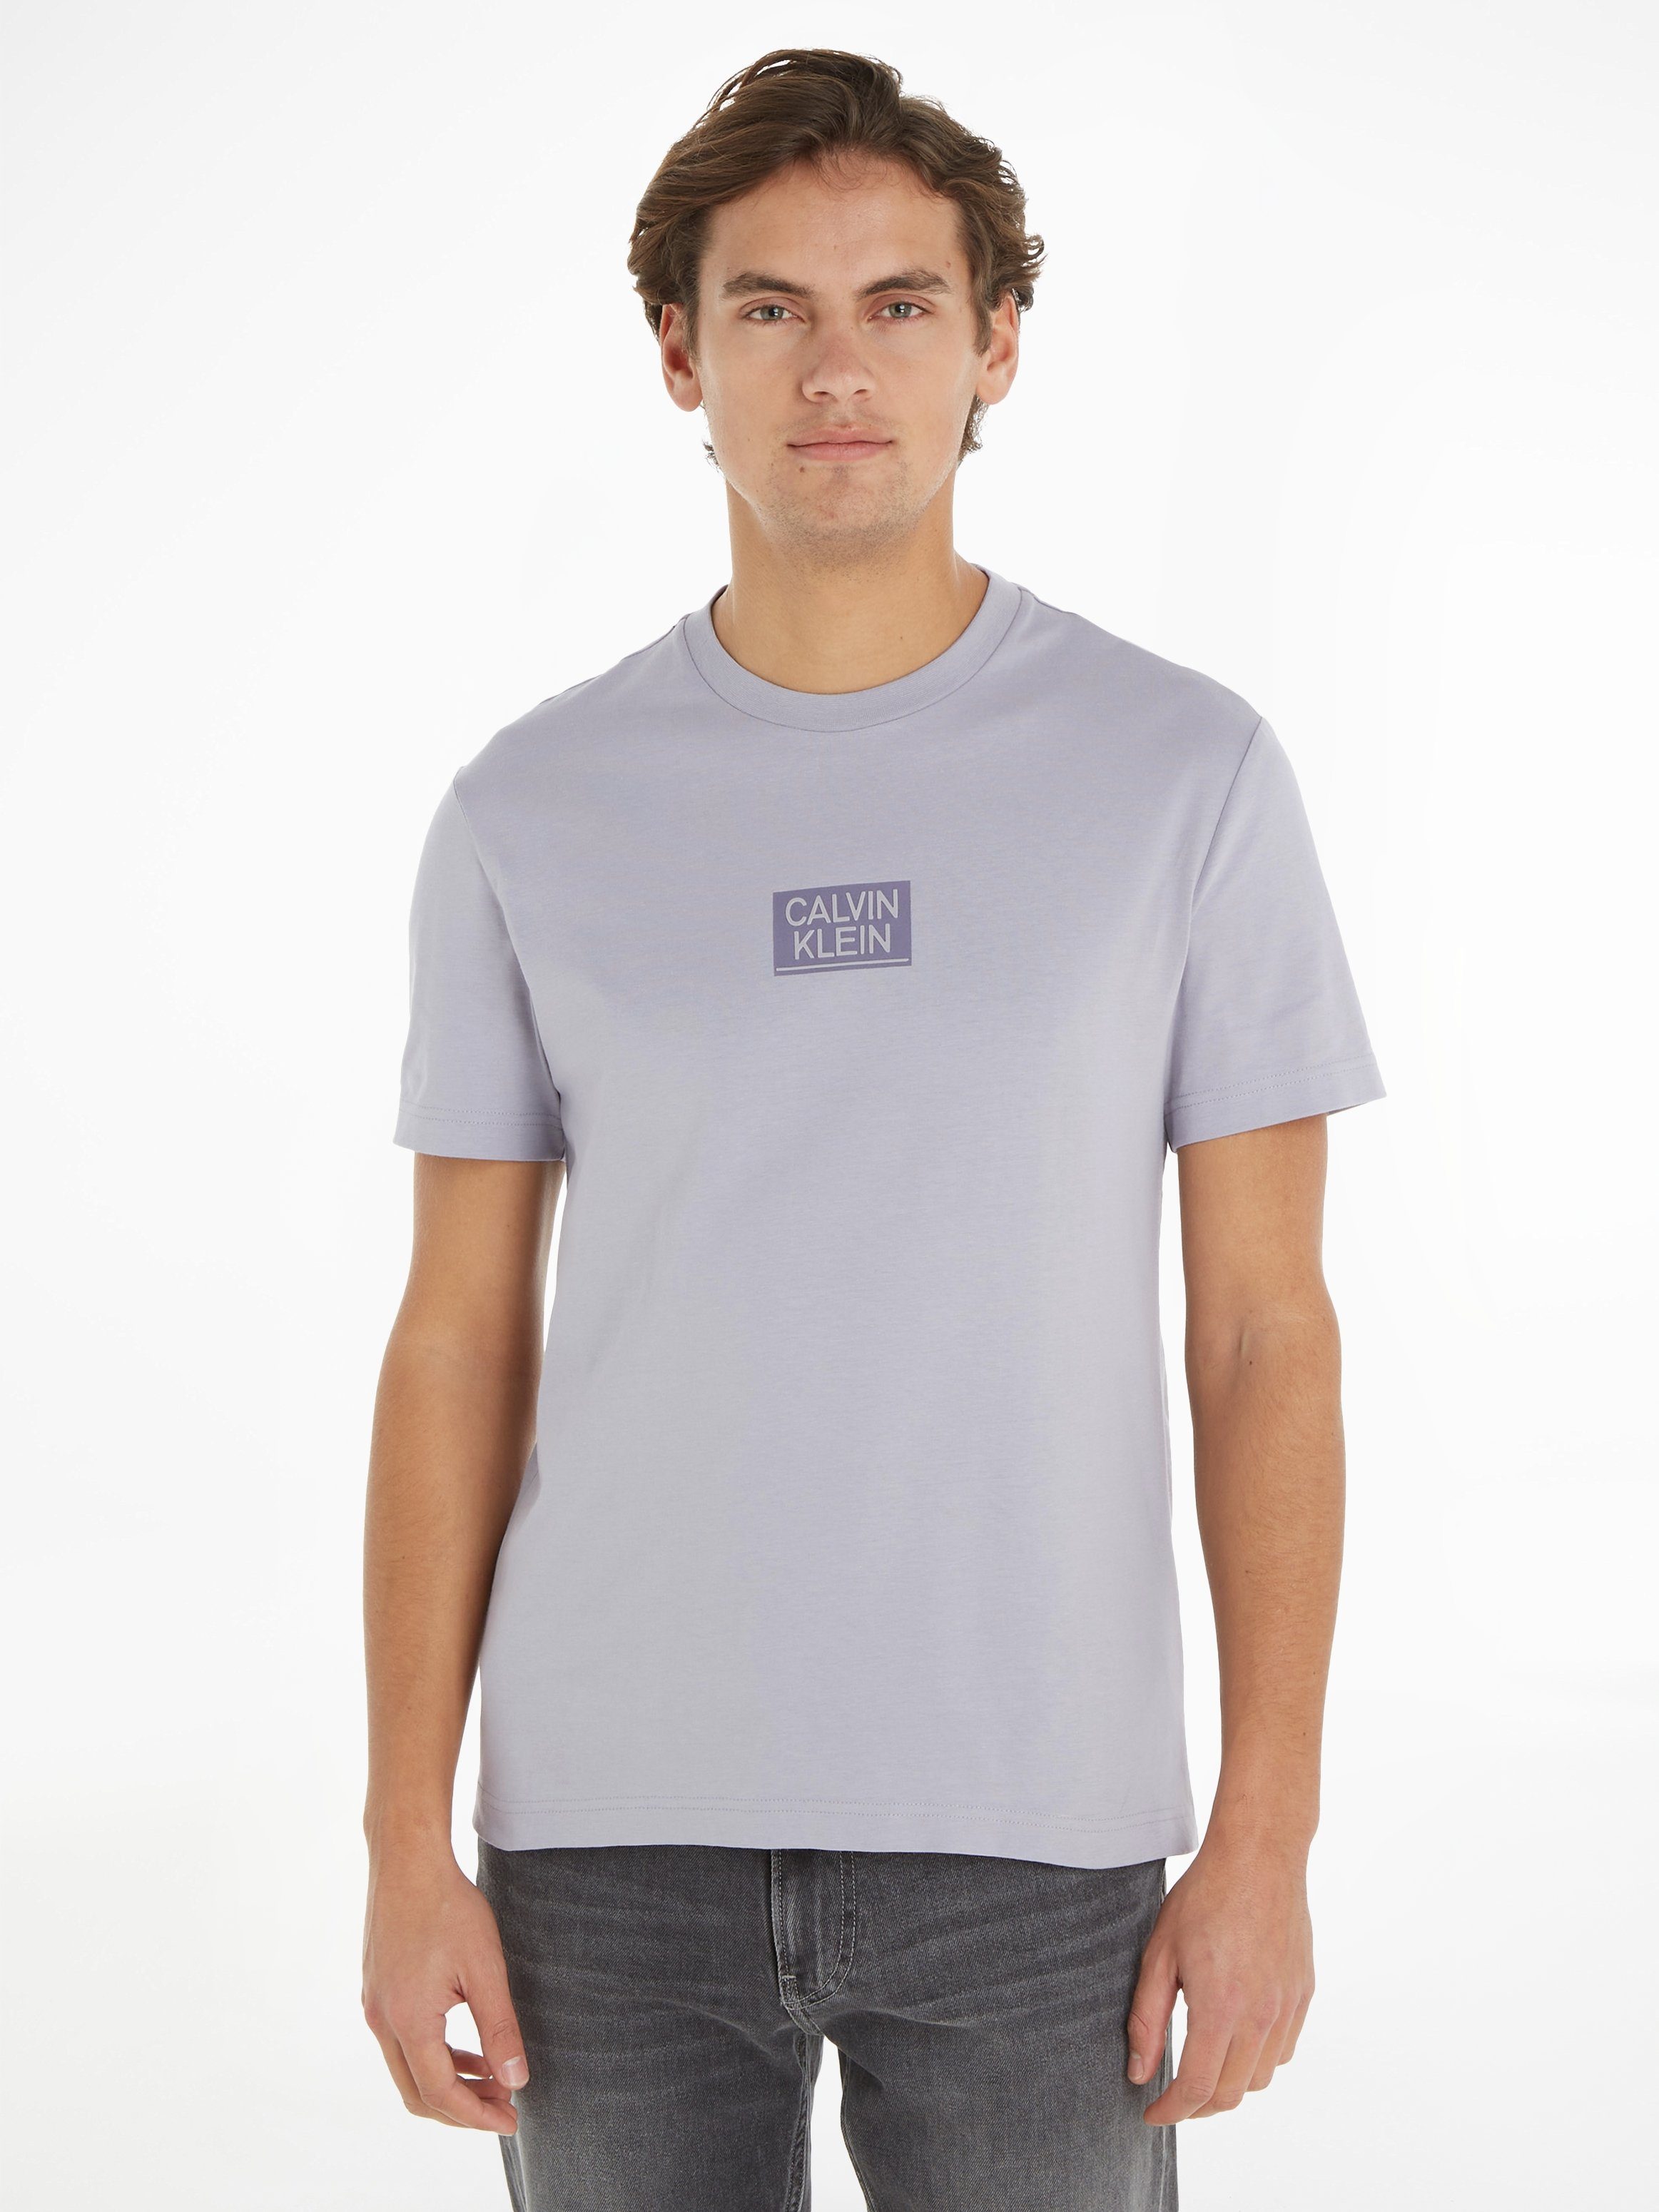 Calvin Klein STENCIL T-SHIRT Dapple LOGO T-Shirt Gray GLOSS